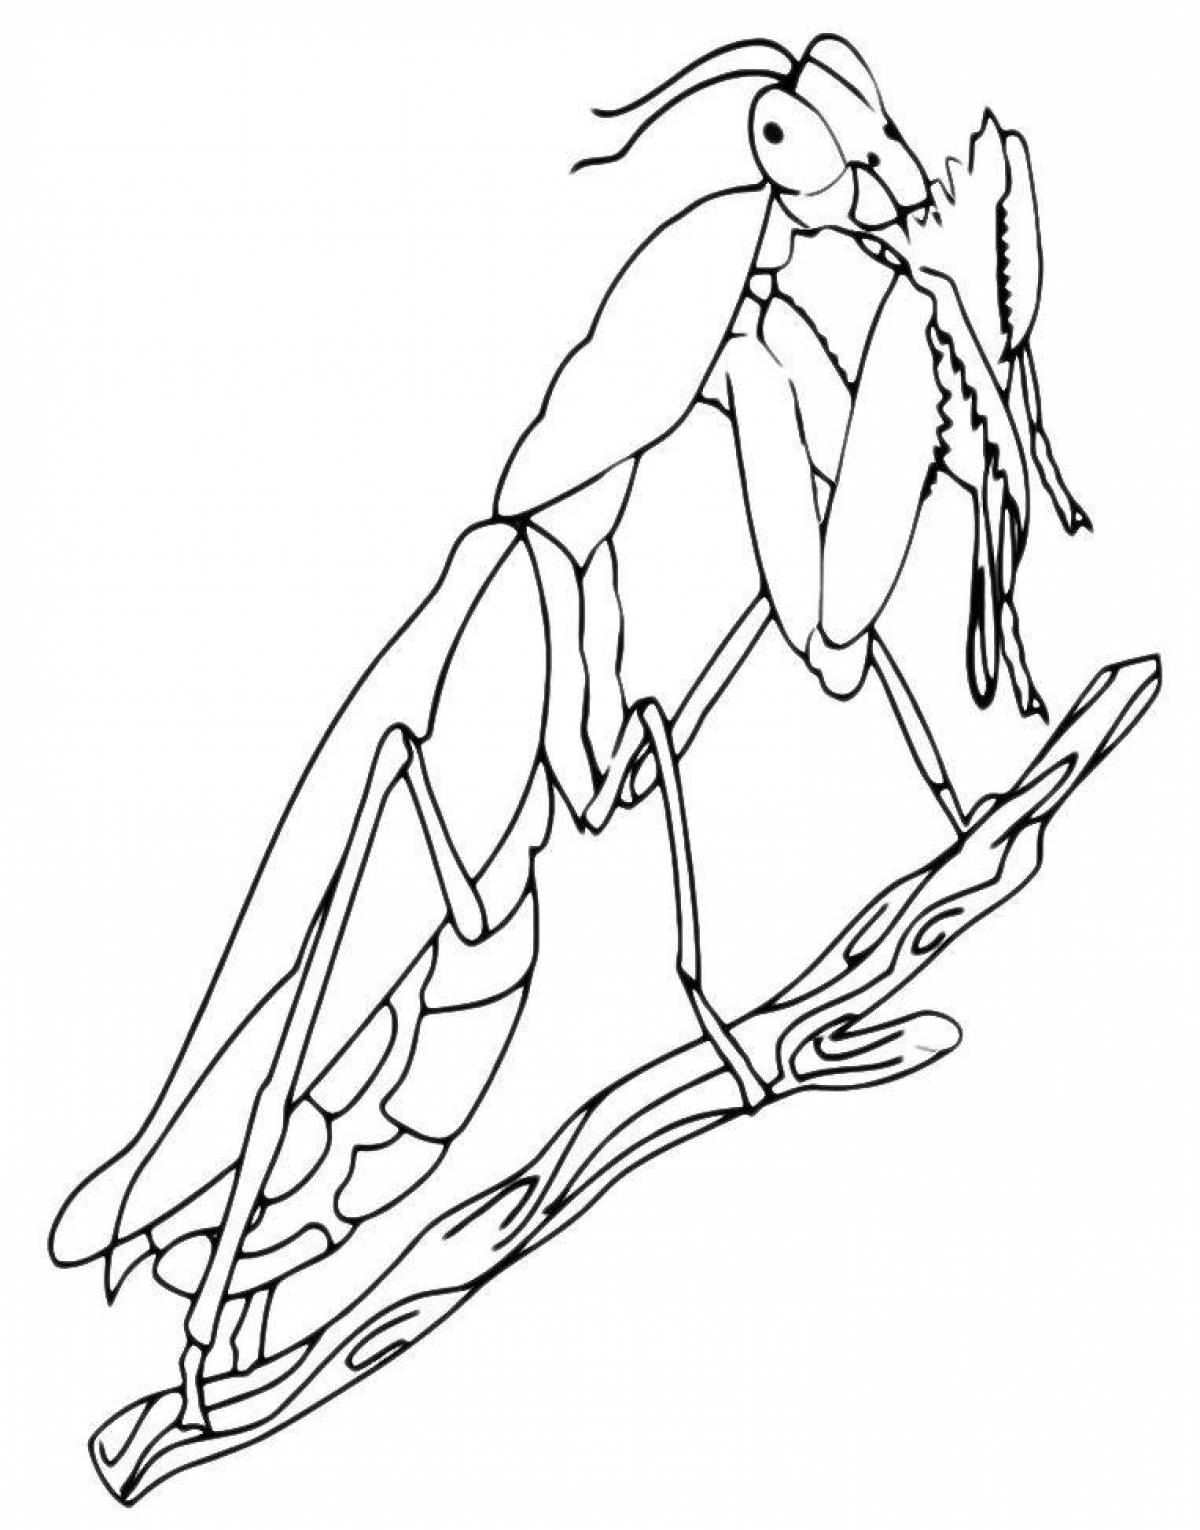 Joyful mantis coloring page